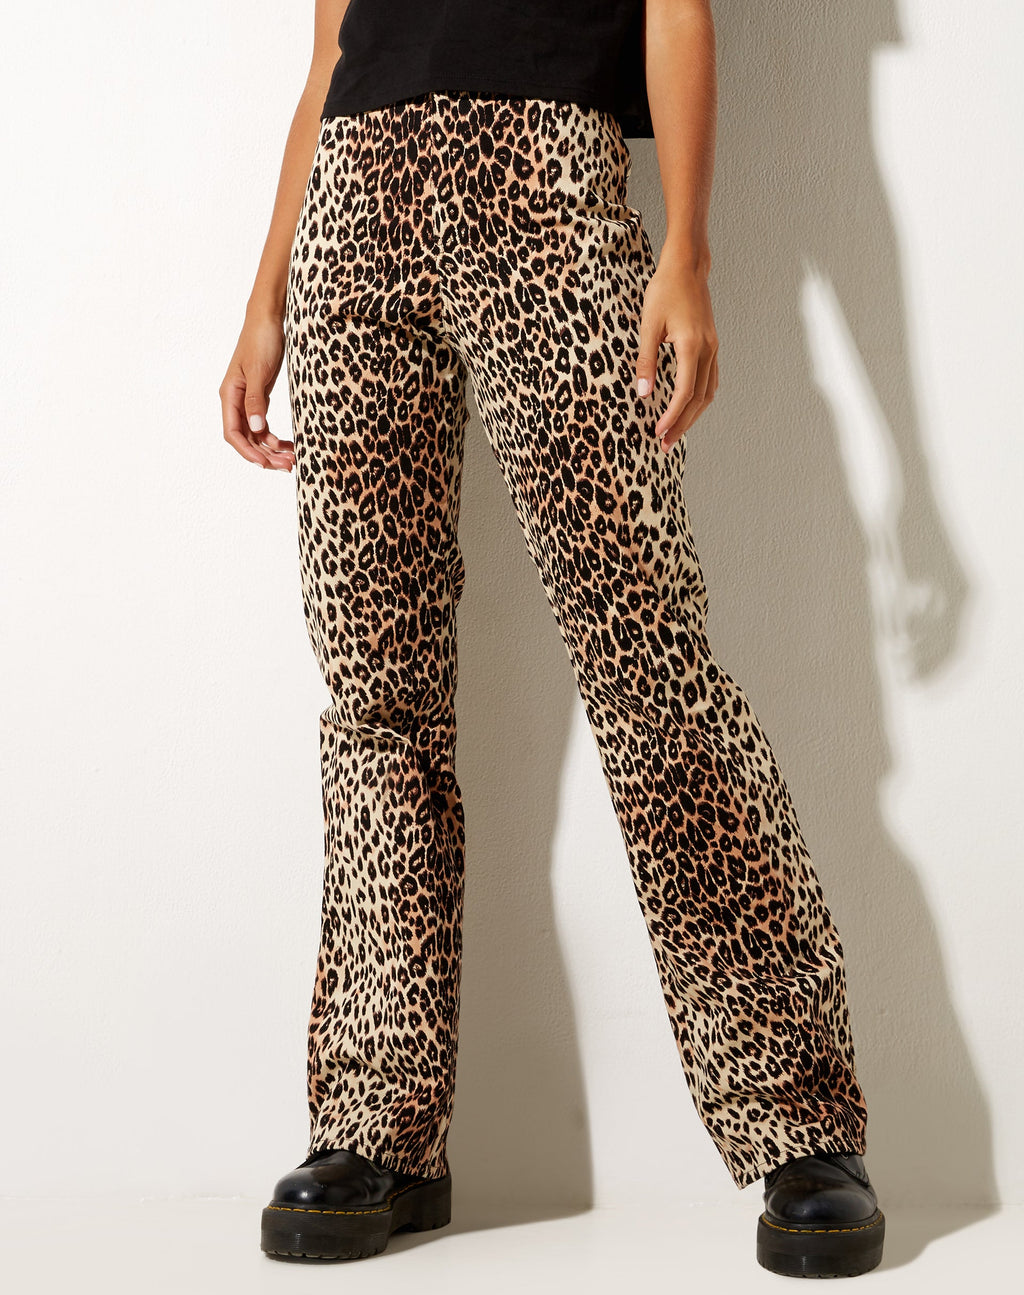 Zoven Flare Trouser in True Leopard